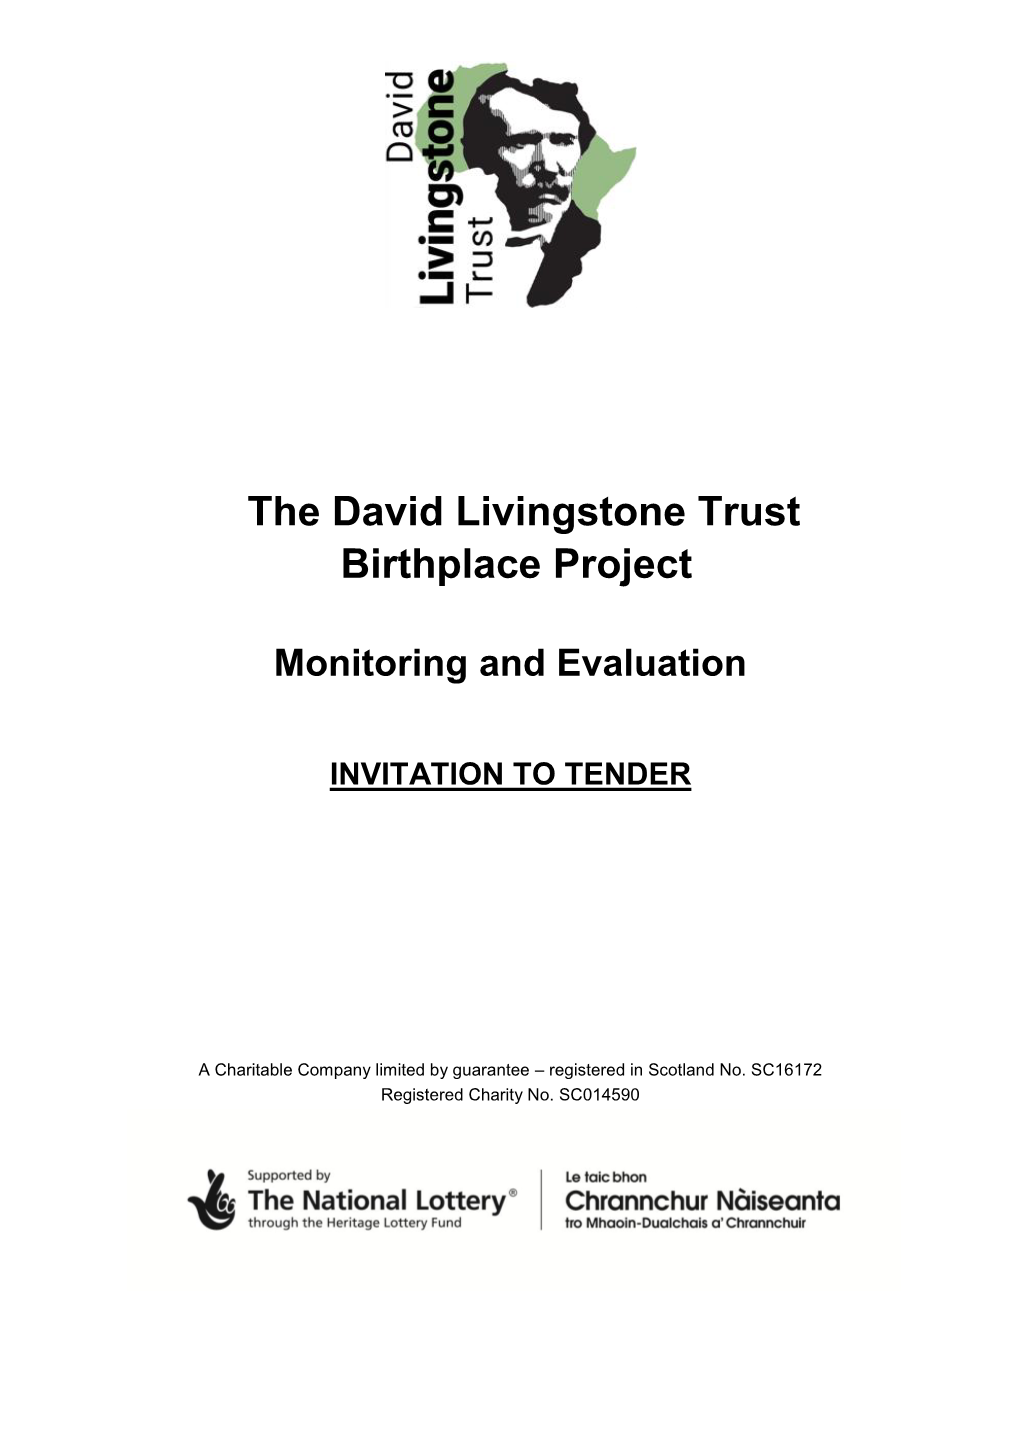 The David Livingstone Trust Birthplace Project